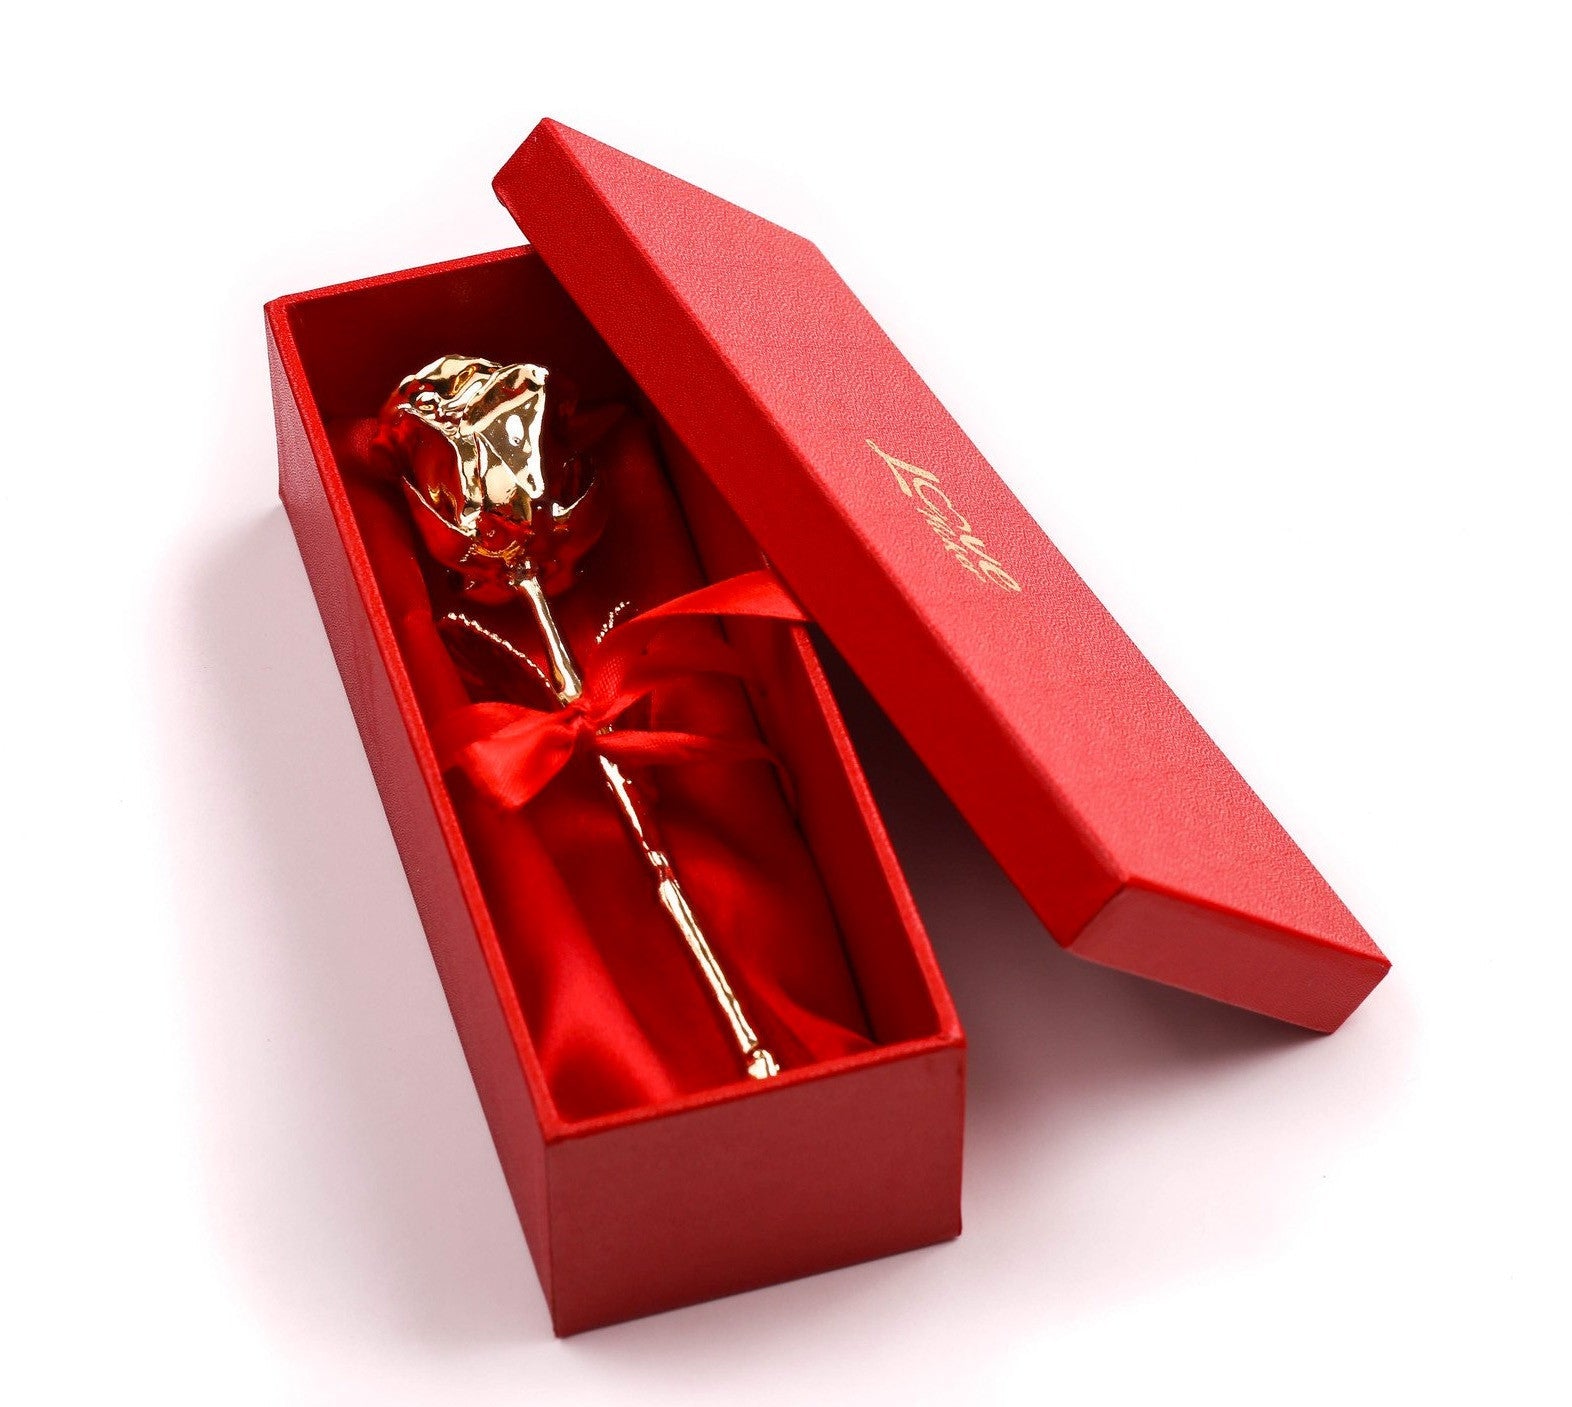 24K Gold Dipped Rose 7" - Scarlet Color Gift Box - Lovepicker